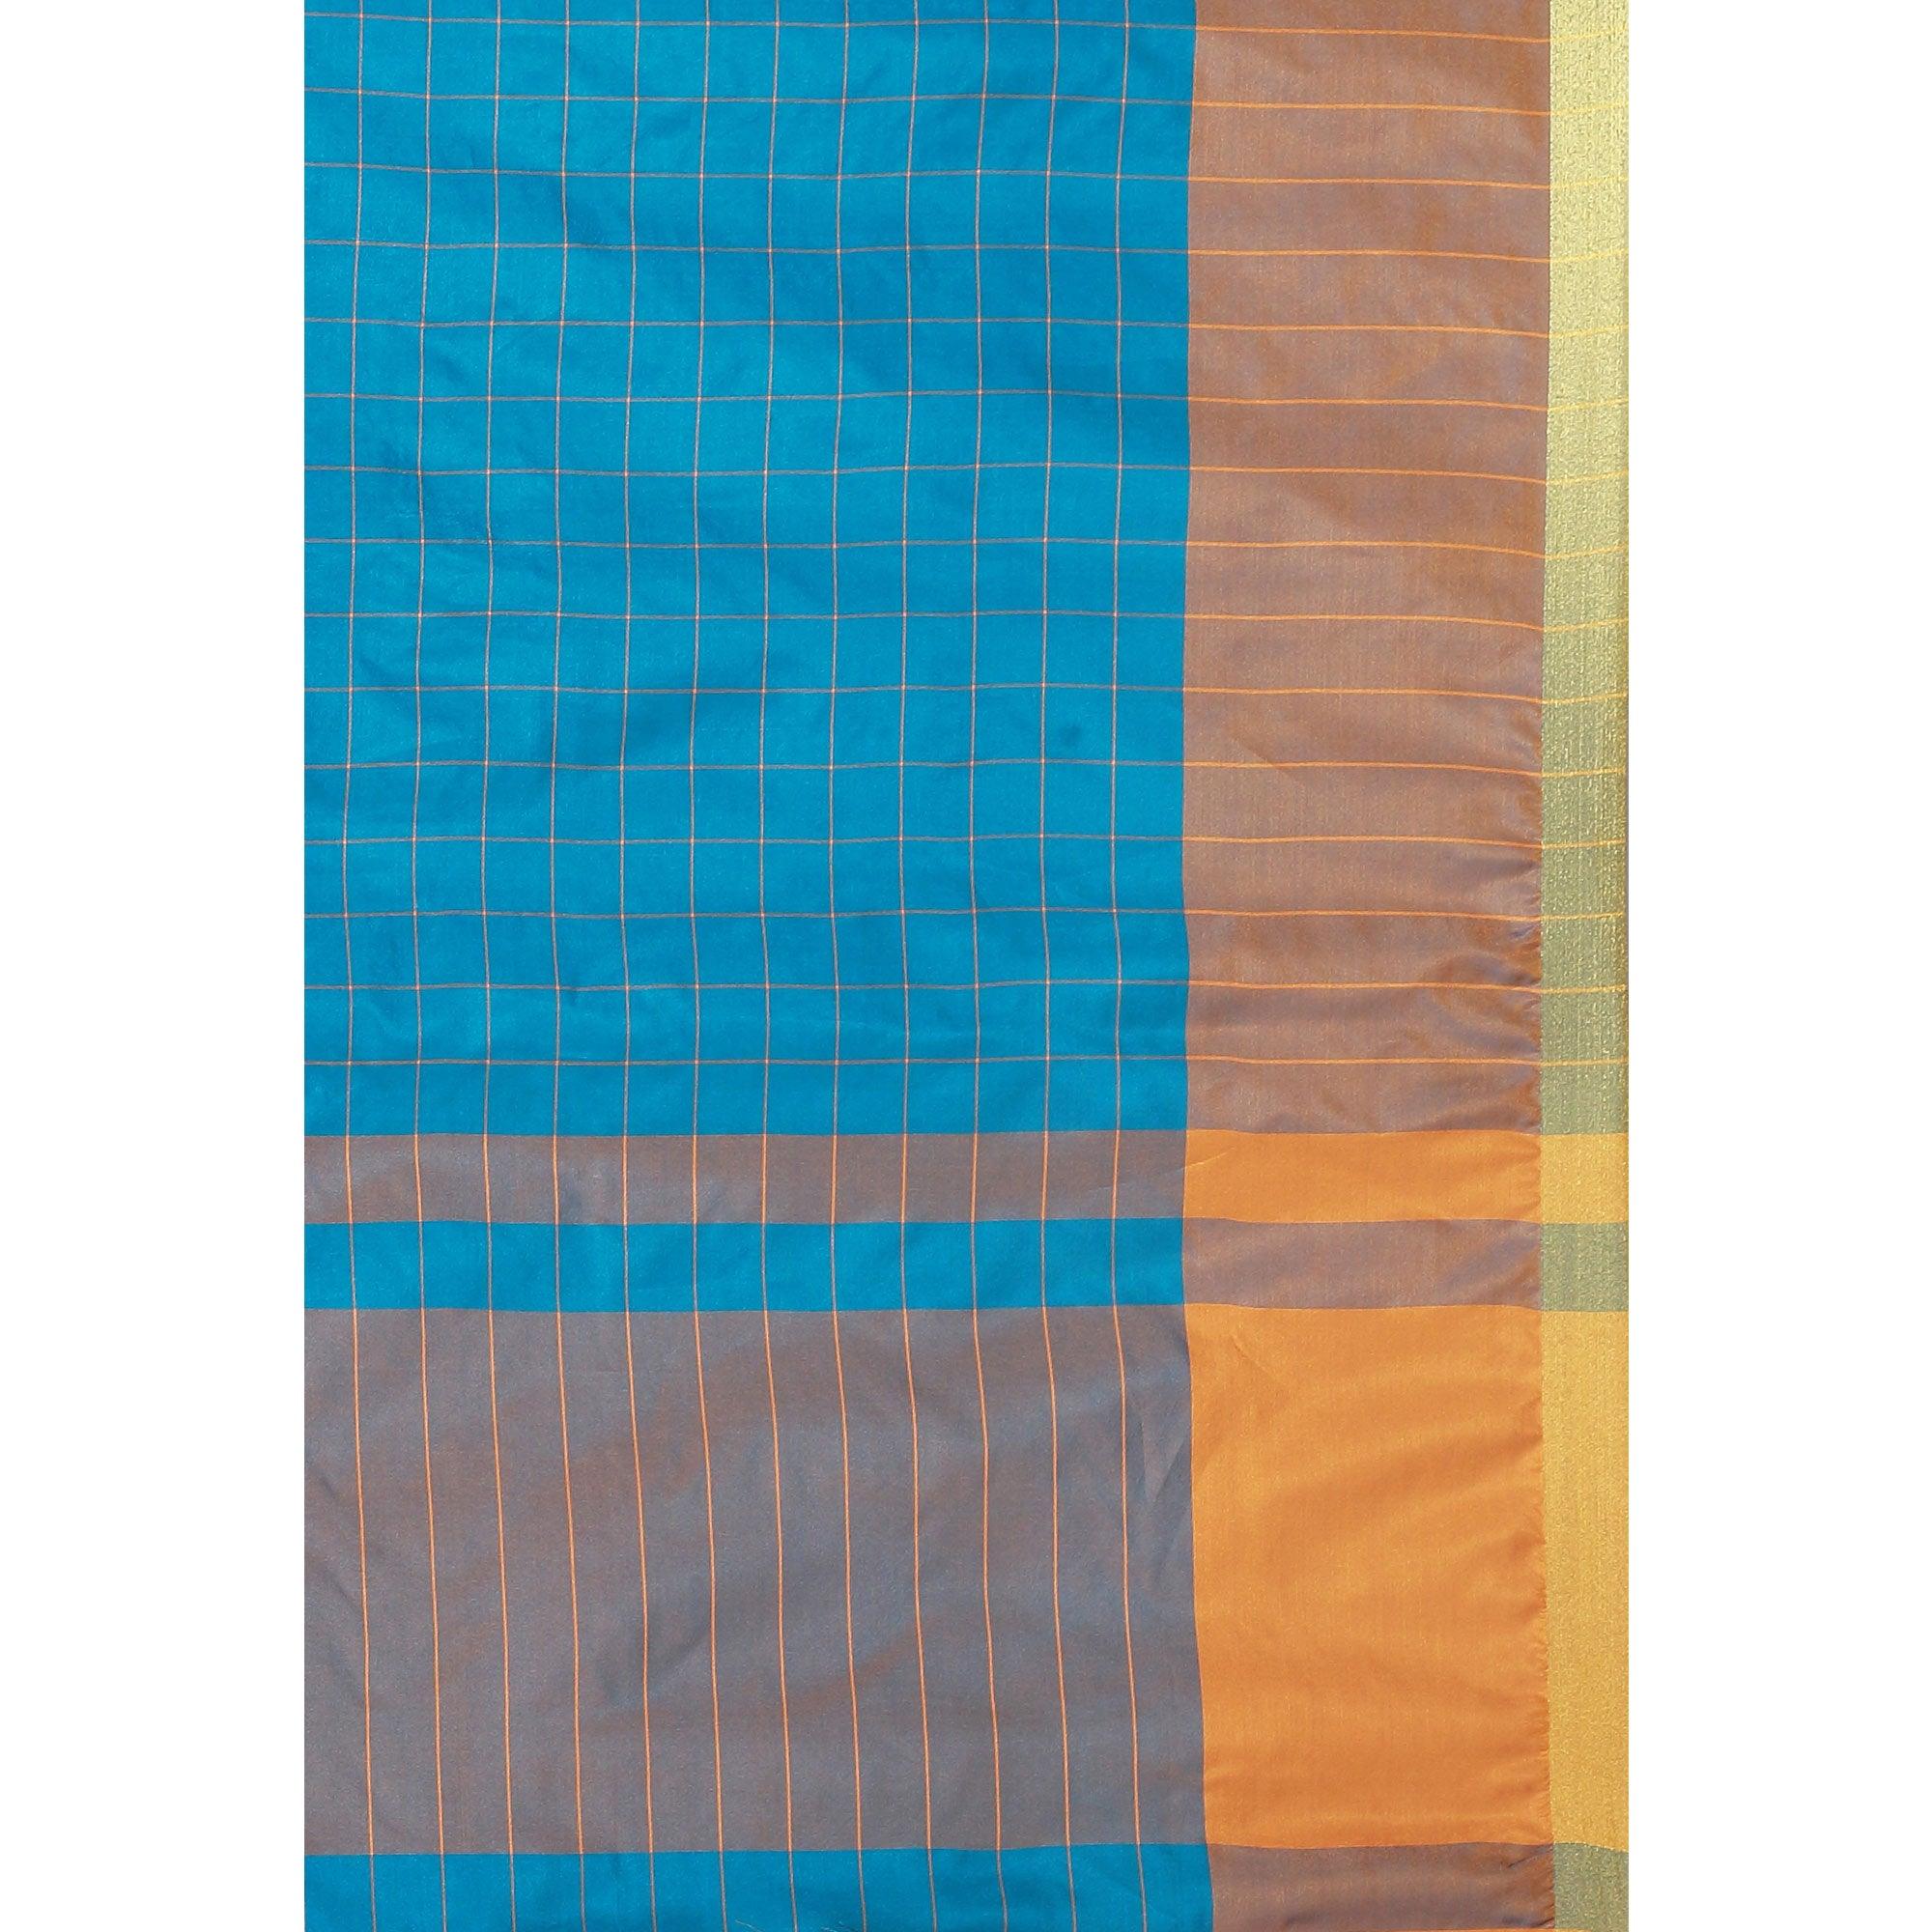 Refreshing Dark Sky Blue Colored Festive Wear Woven Tussar Silk Saree - Peachmode